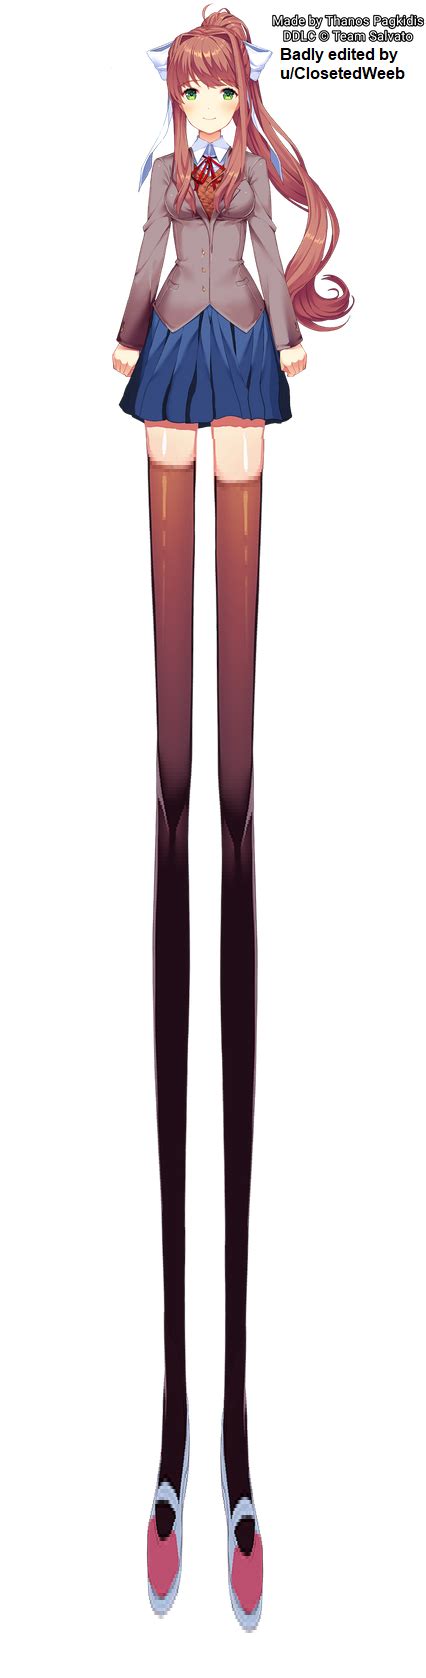 I Felt The Monika Full Body Sprite Wasnt Tall Enough So I Fixed It